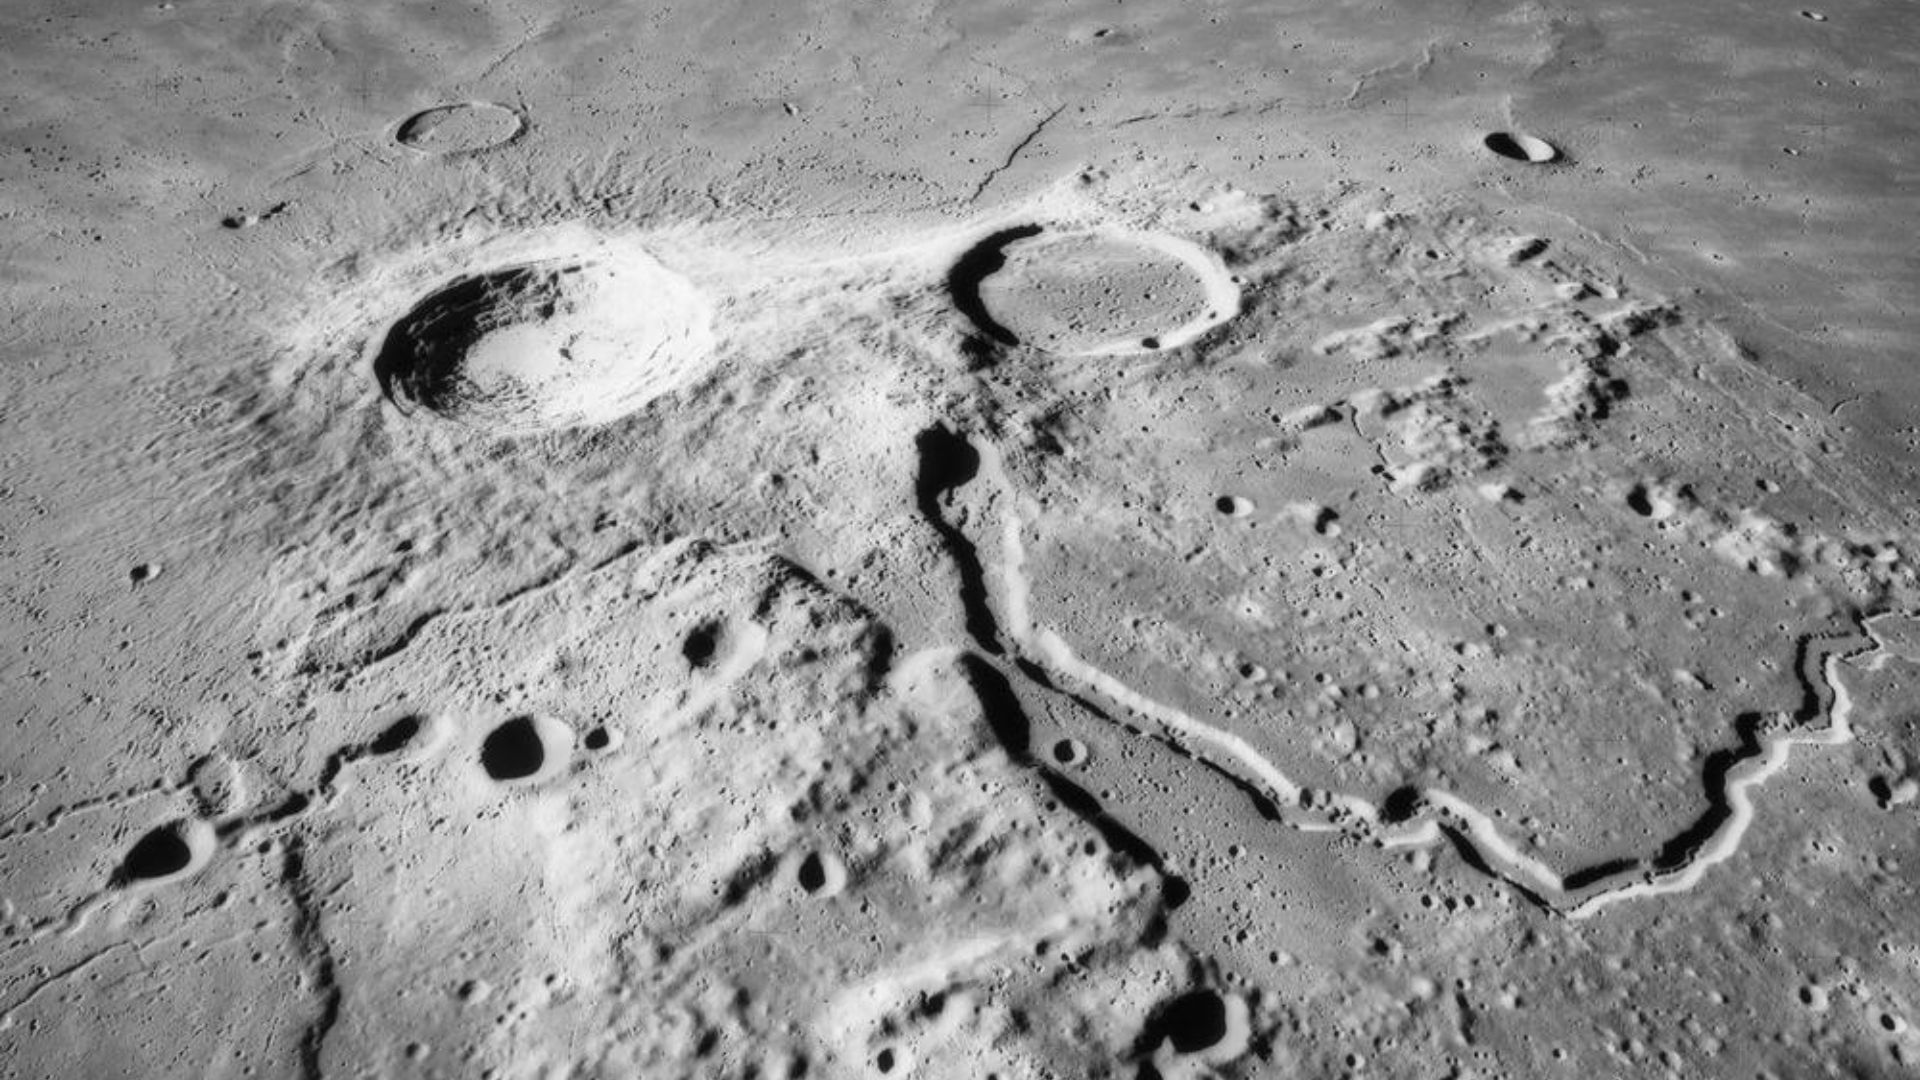 Schroeter's Valley on the Moon. Credit: NASA